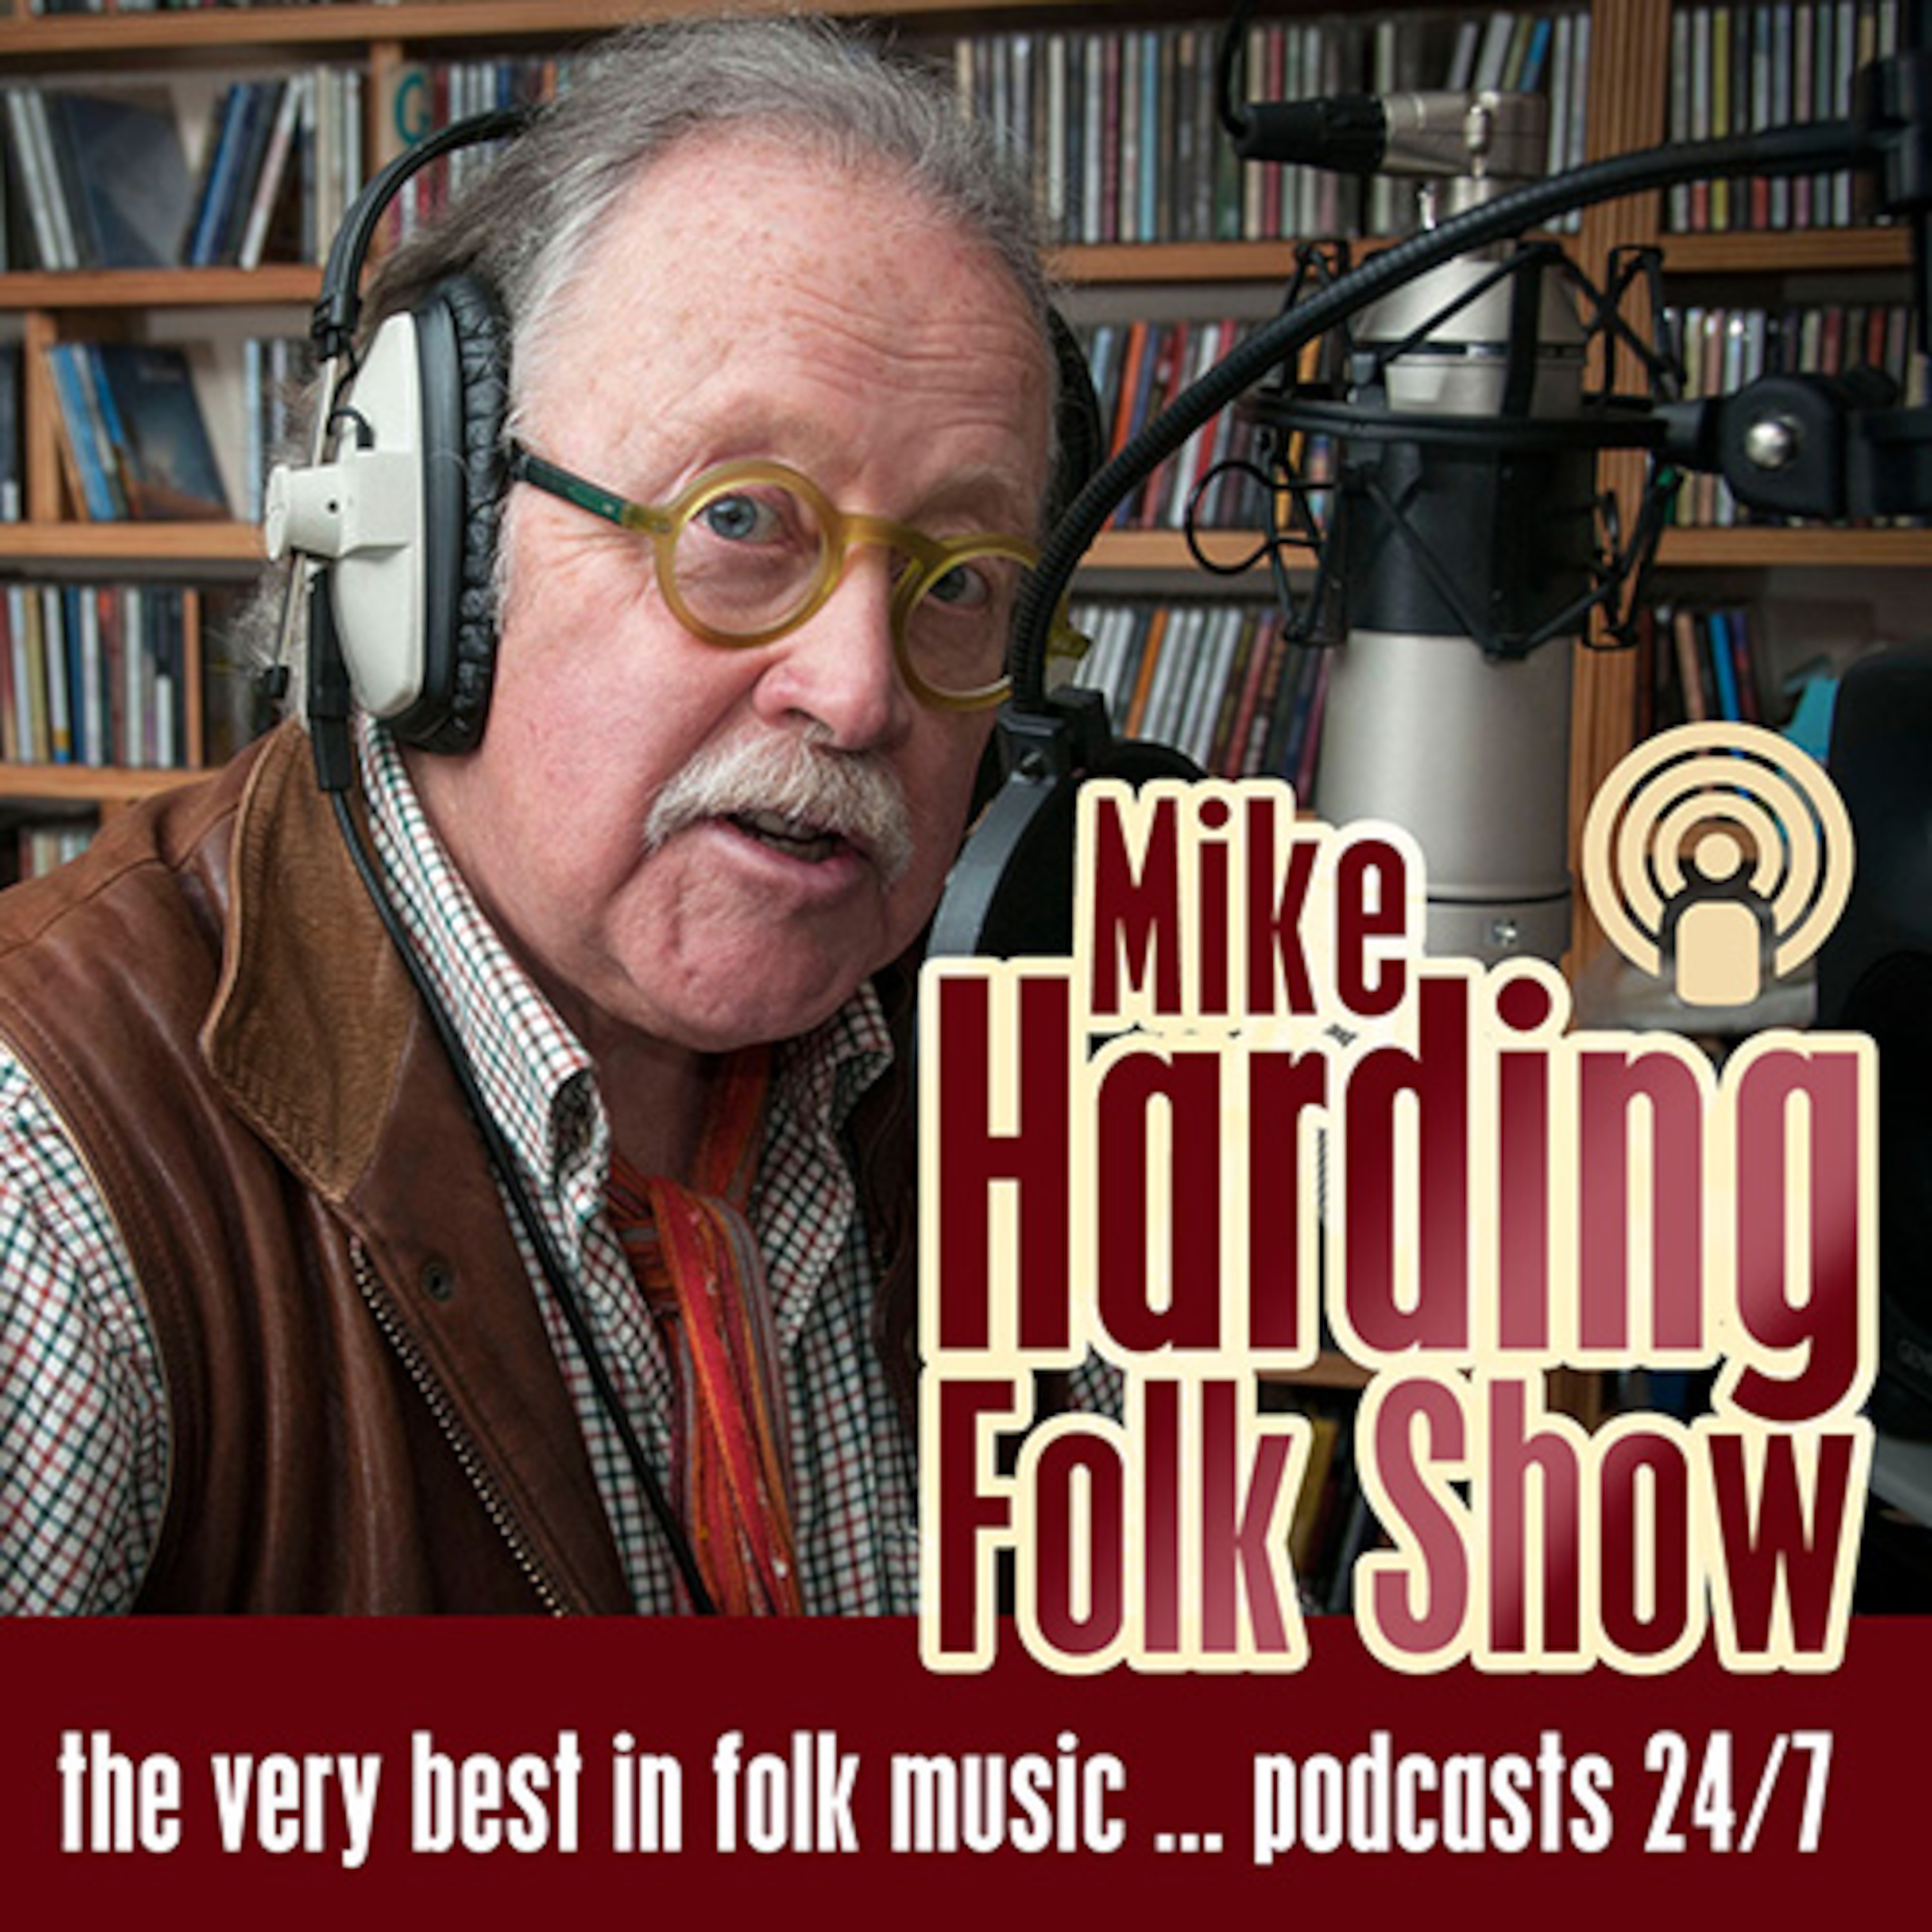 Mike Harding Folk Show 160